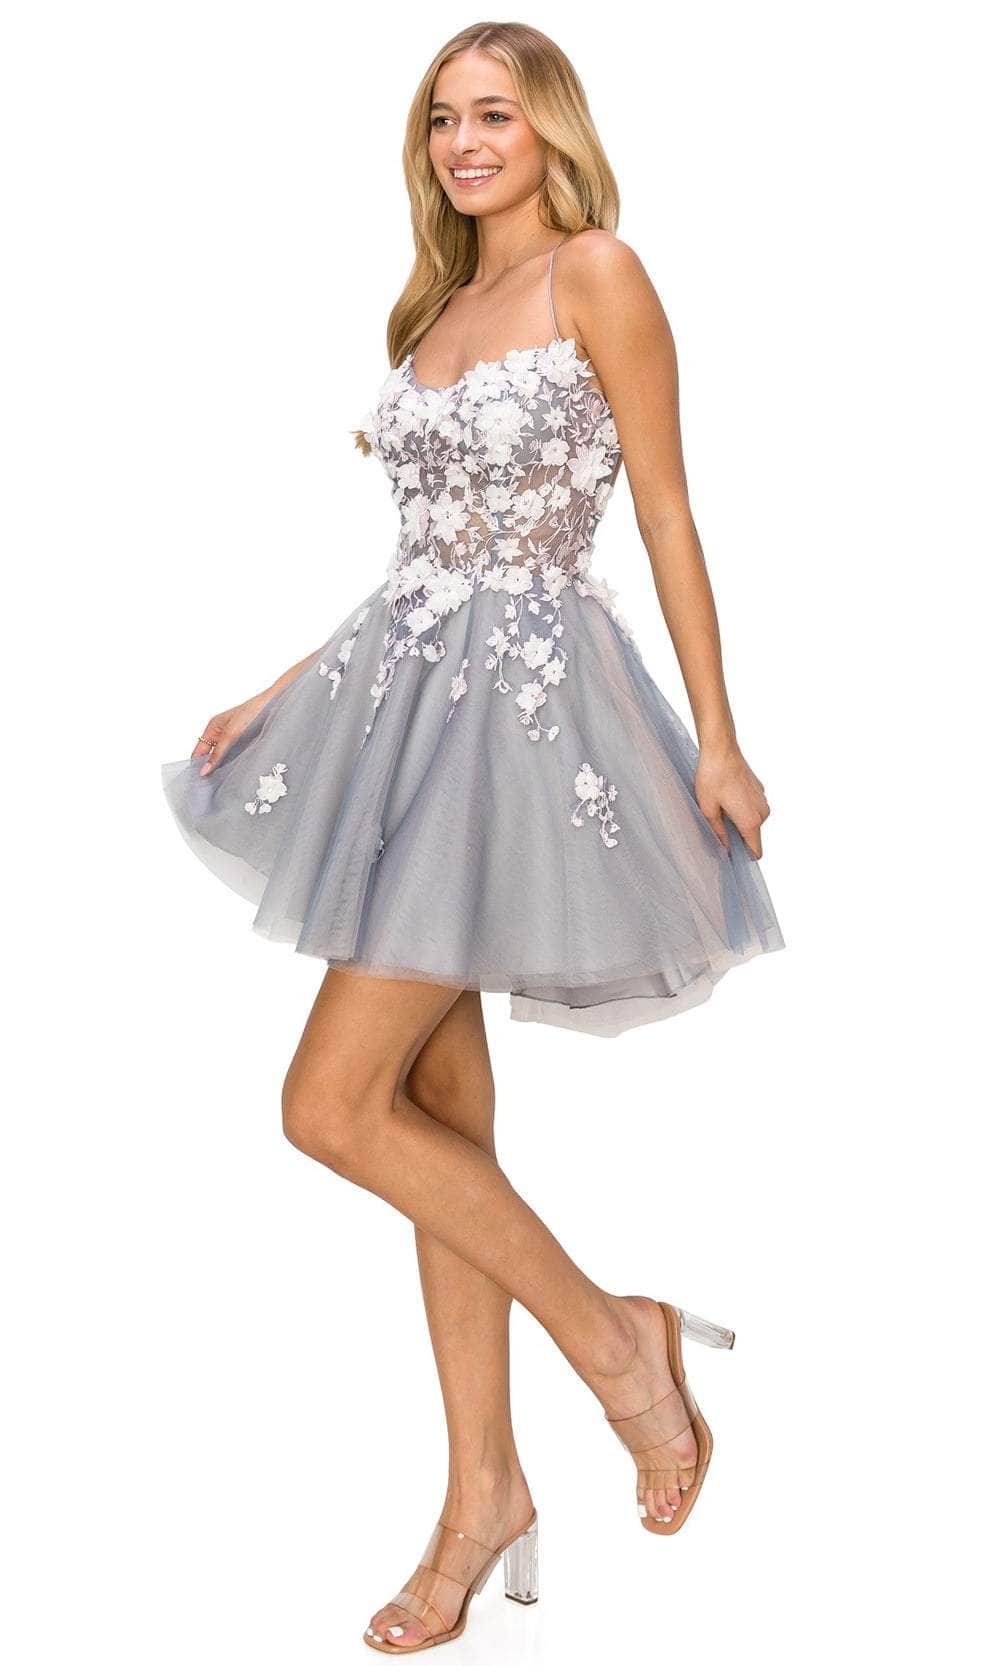 Cinderella Couture 8053J - 3D Floral Embellished A-line Dress Special Occasion Dress